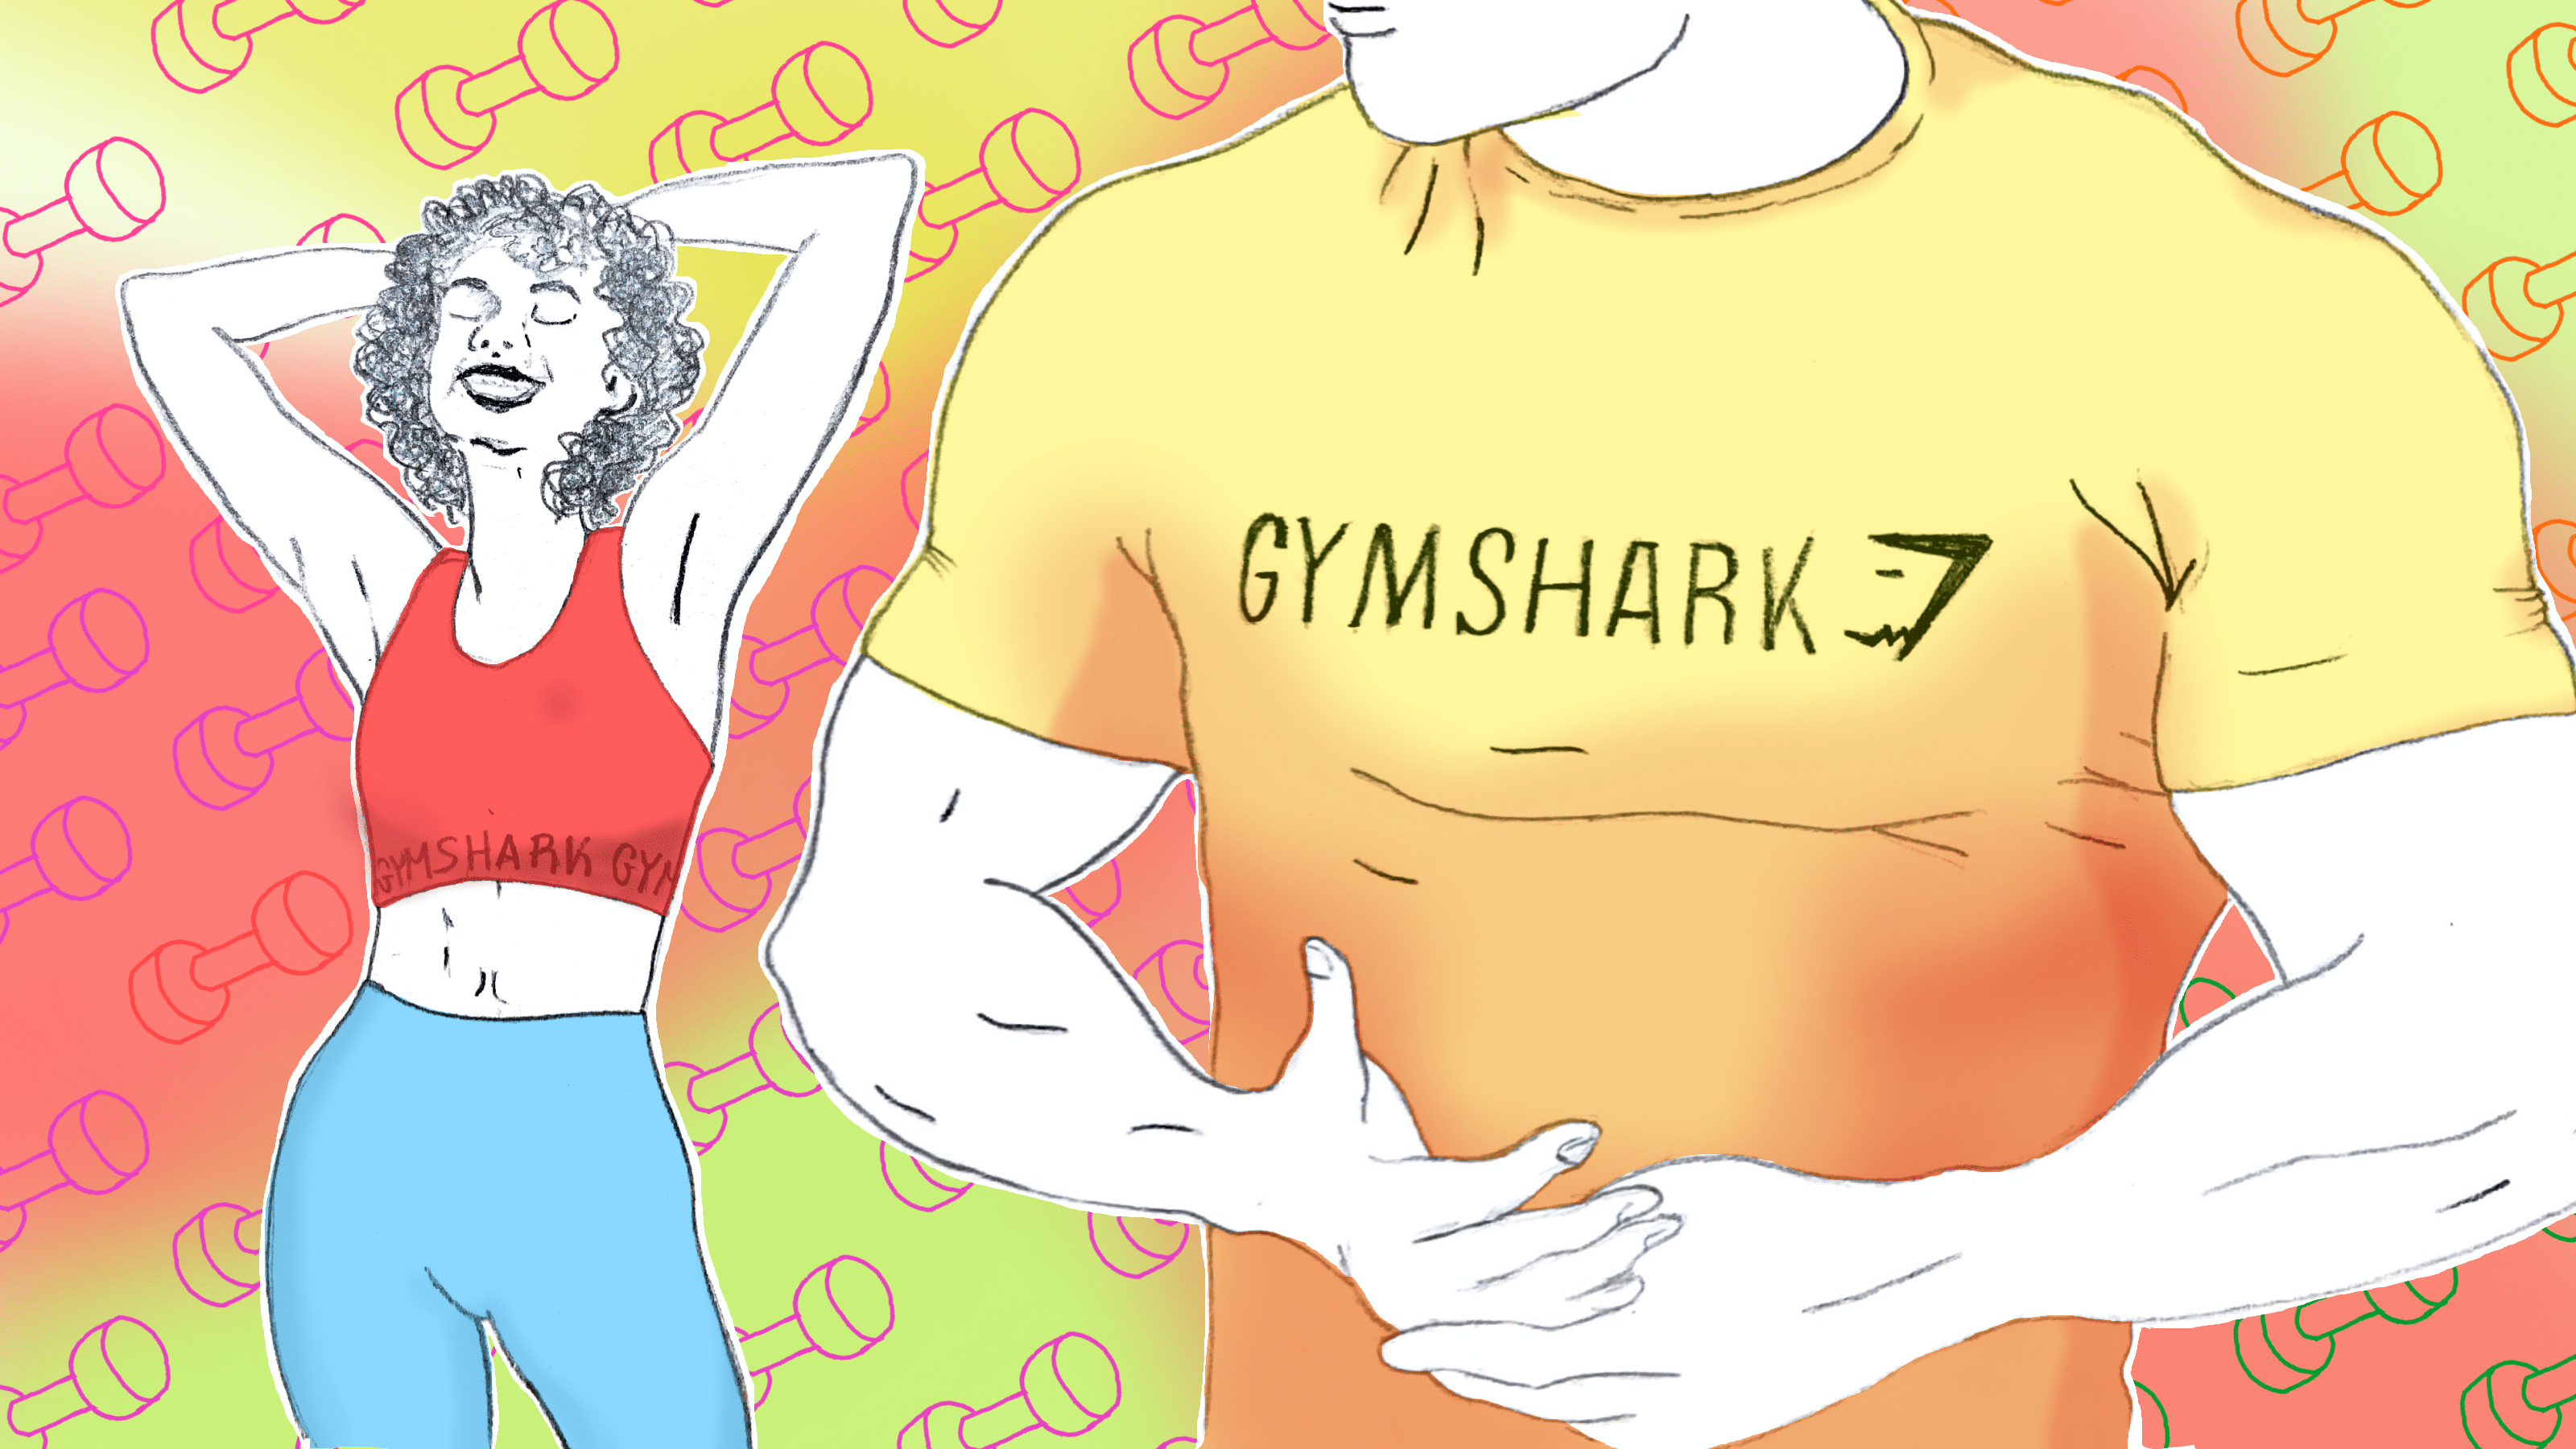 Gymshark: an E-commerce Phenomenon - The Oxford Blue